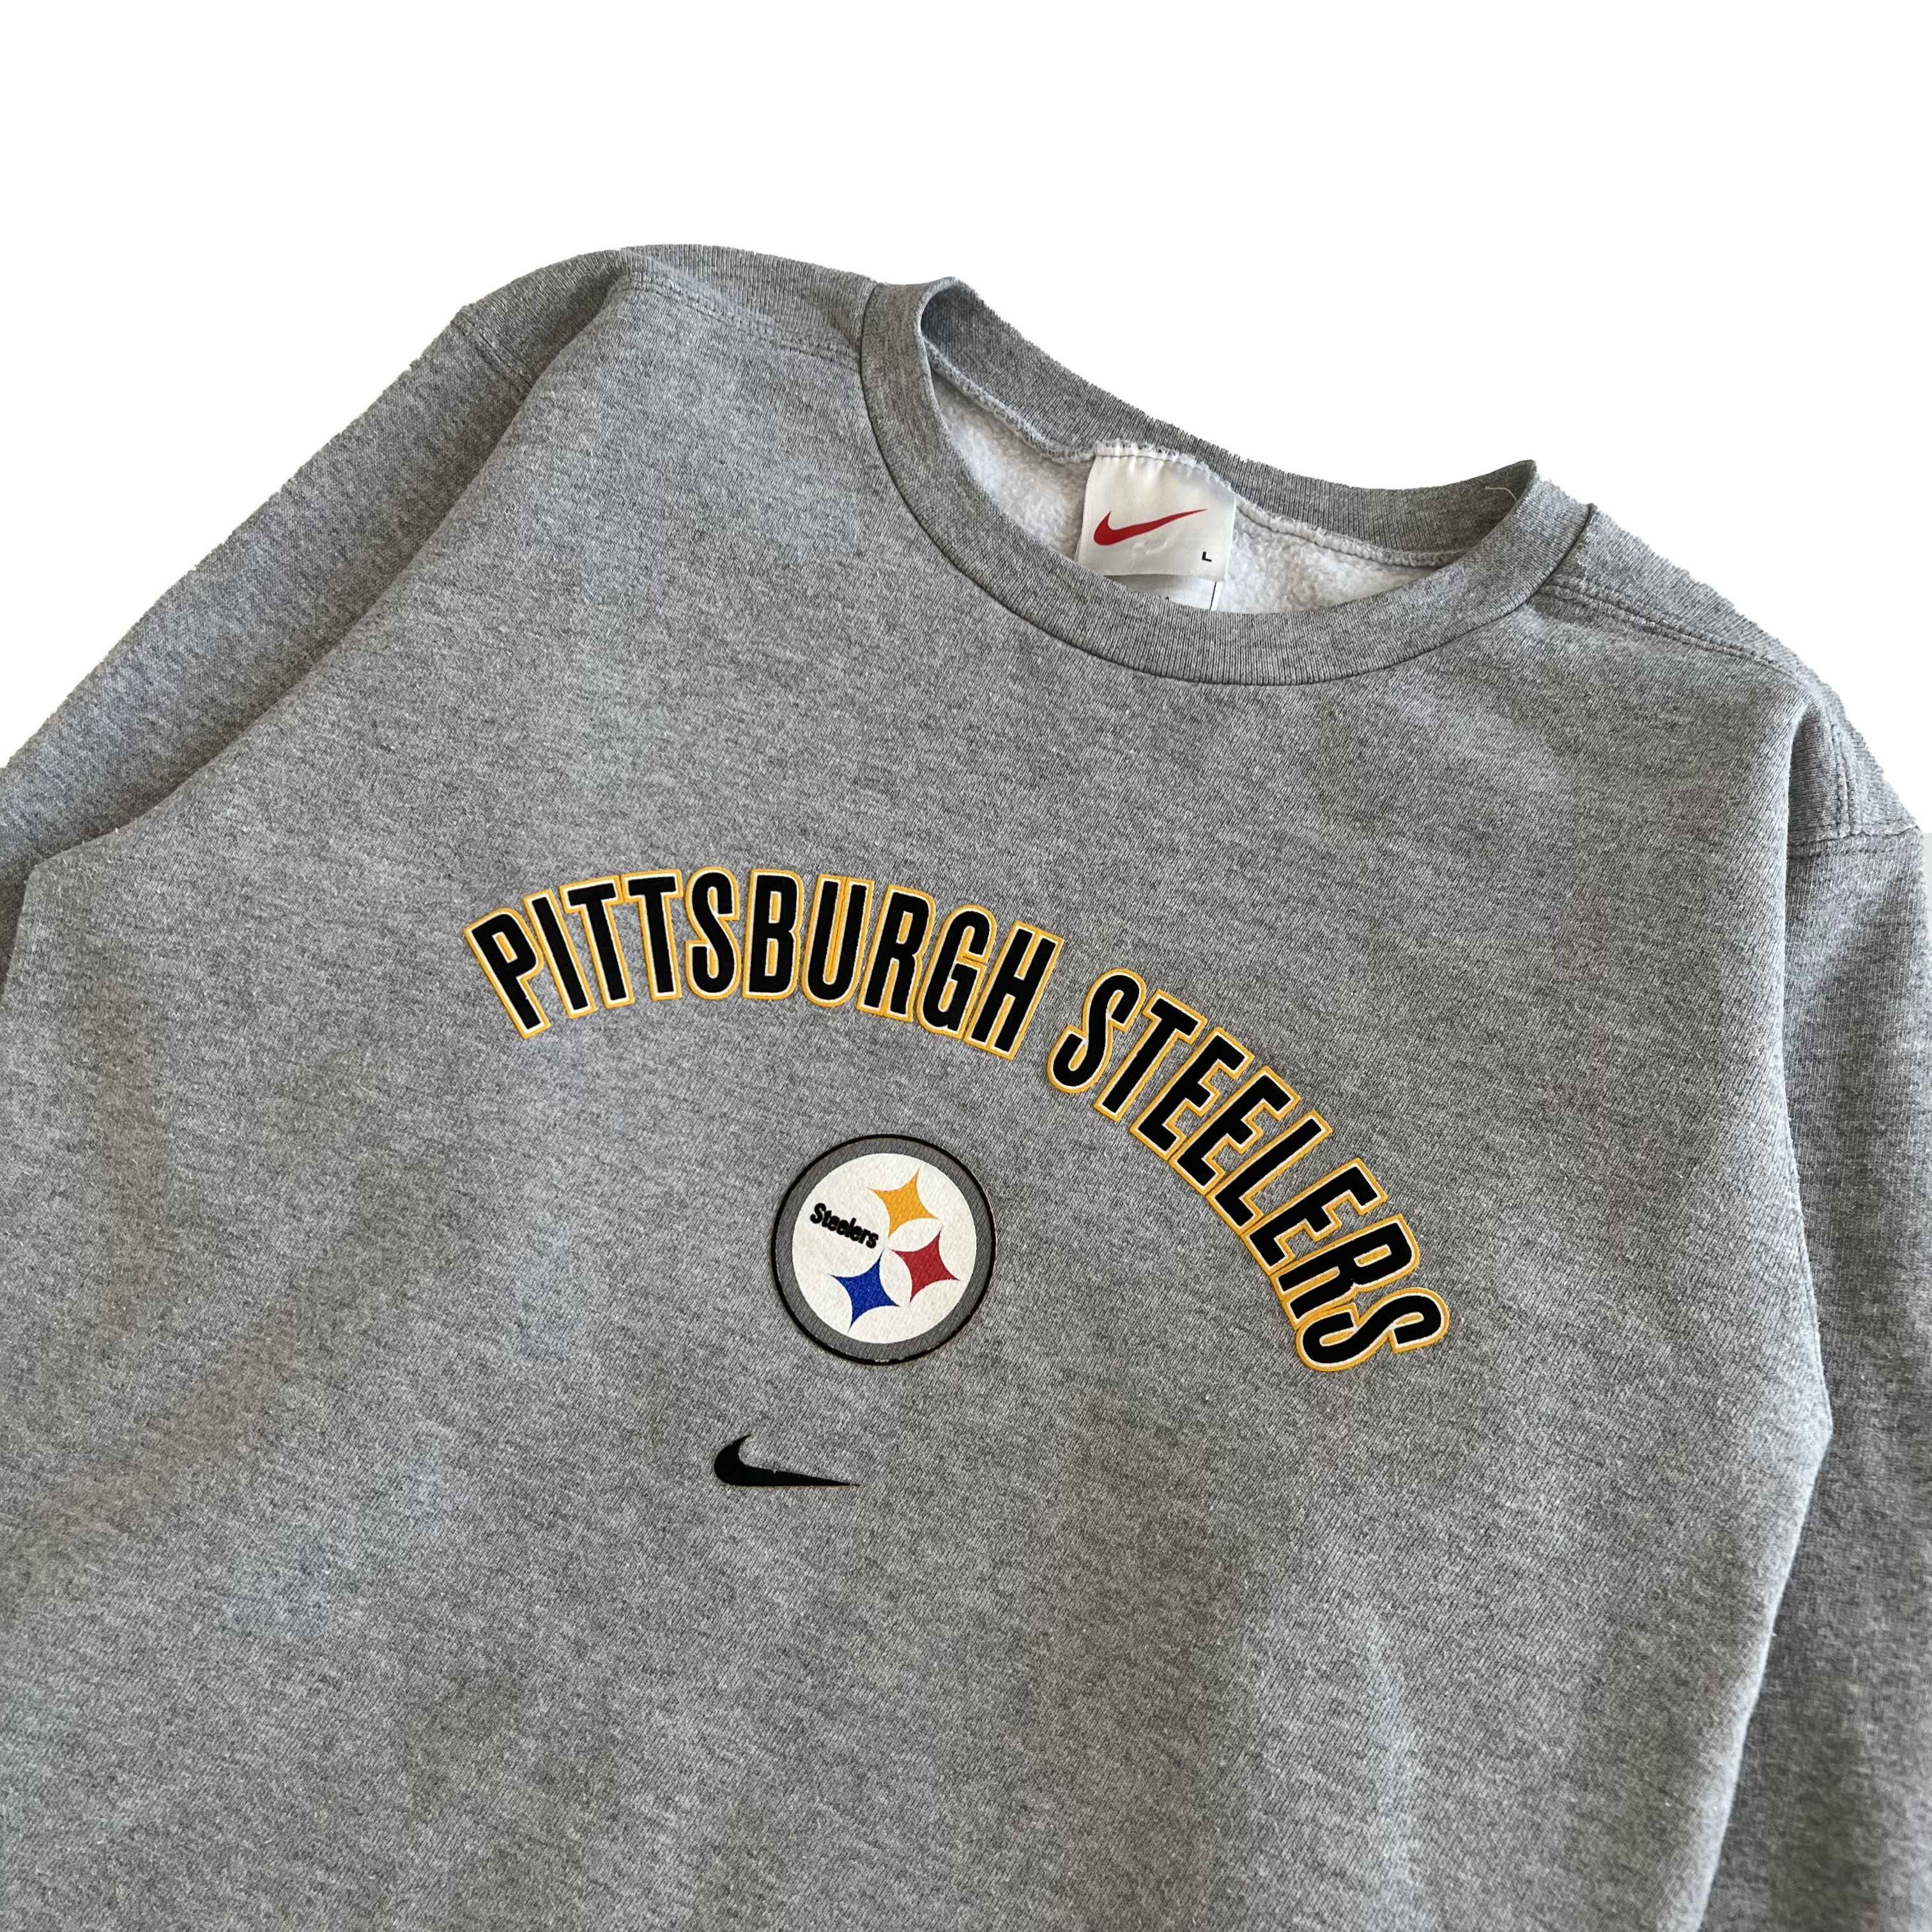 Women's Nike Pittsburgh Steelers sweatshirt